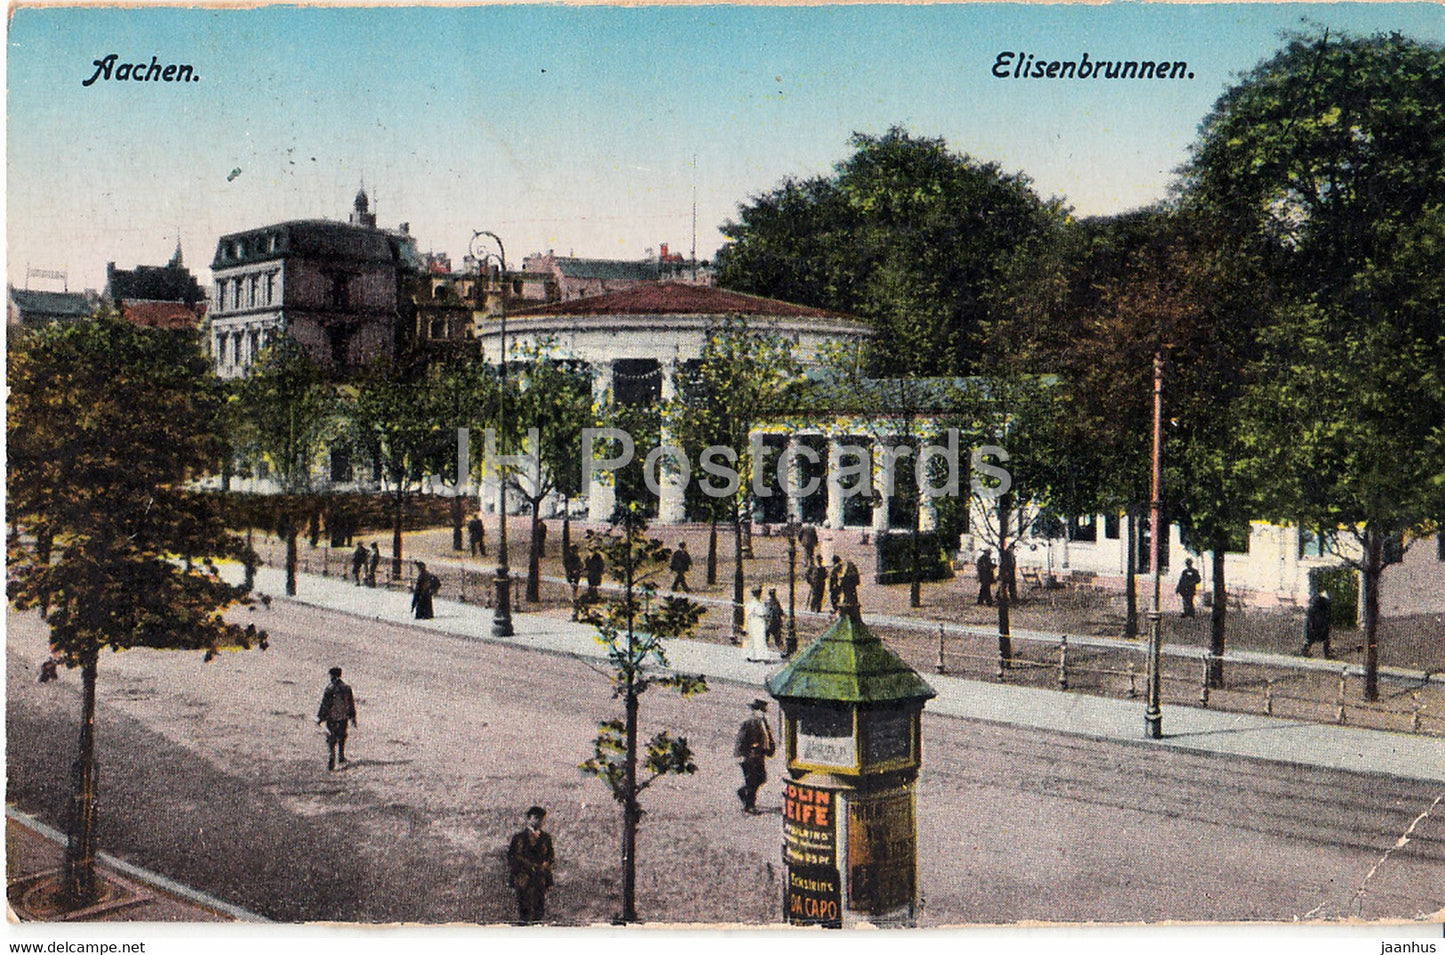 Aachen - Elisenbrunnen - Aix la Chapelle - La Fontaine d'Elise - old postcard - Germany - used - JH Postcards